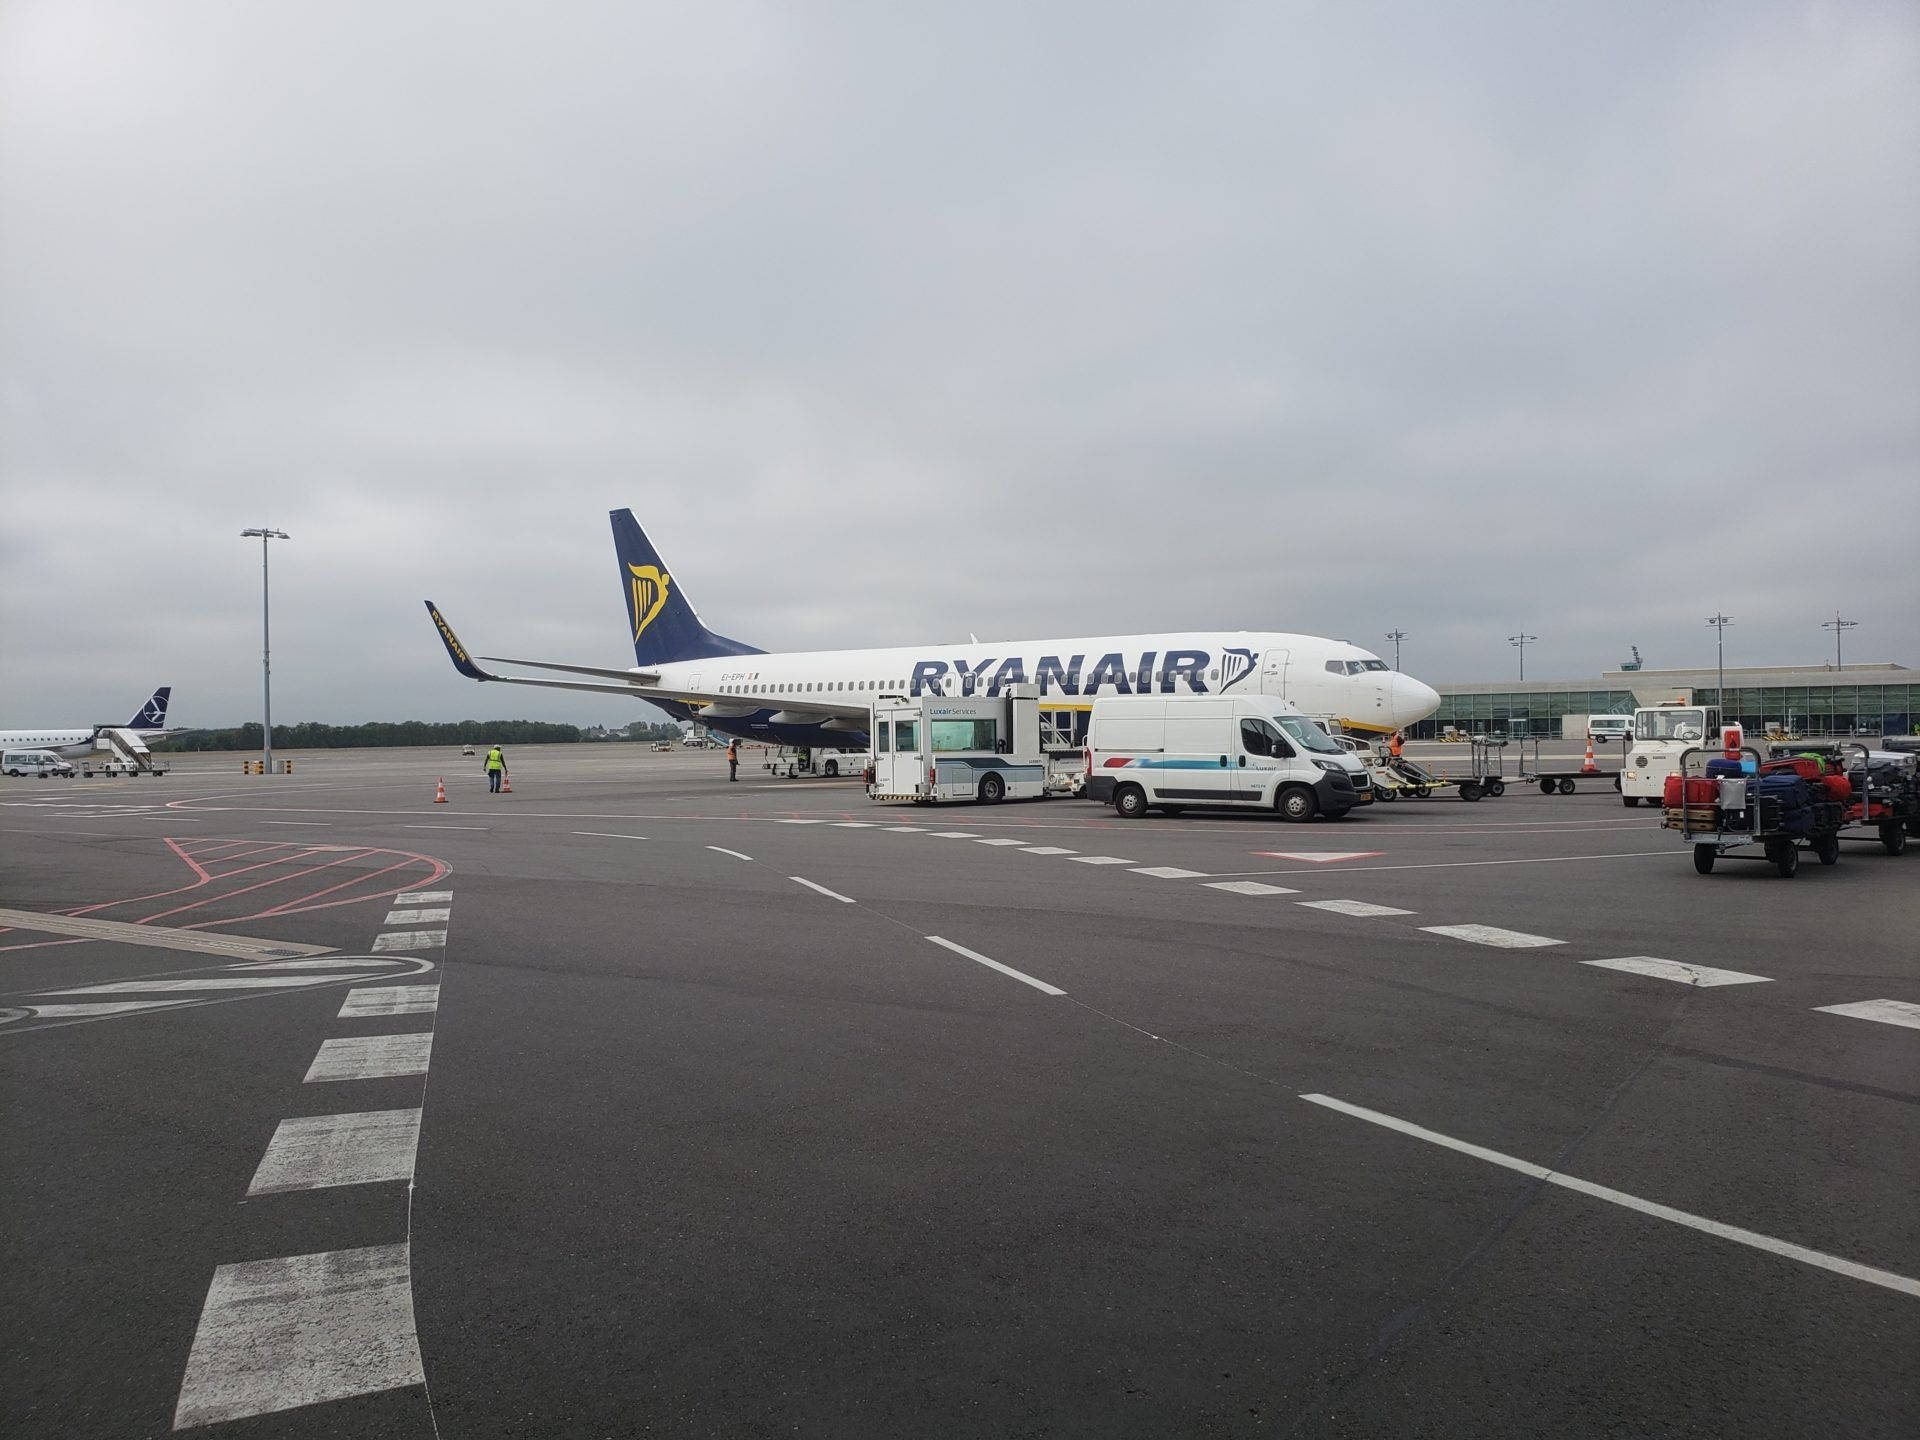 Top 999+ Ryanair Wallpaper Full HD, 4K✅Free to Use